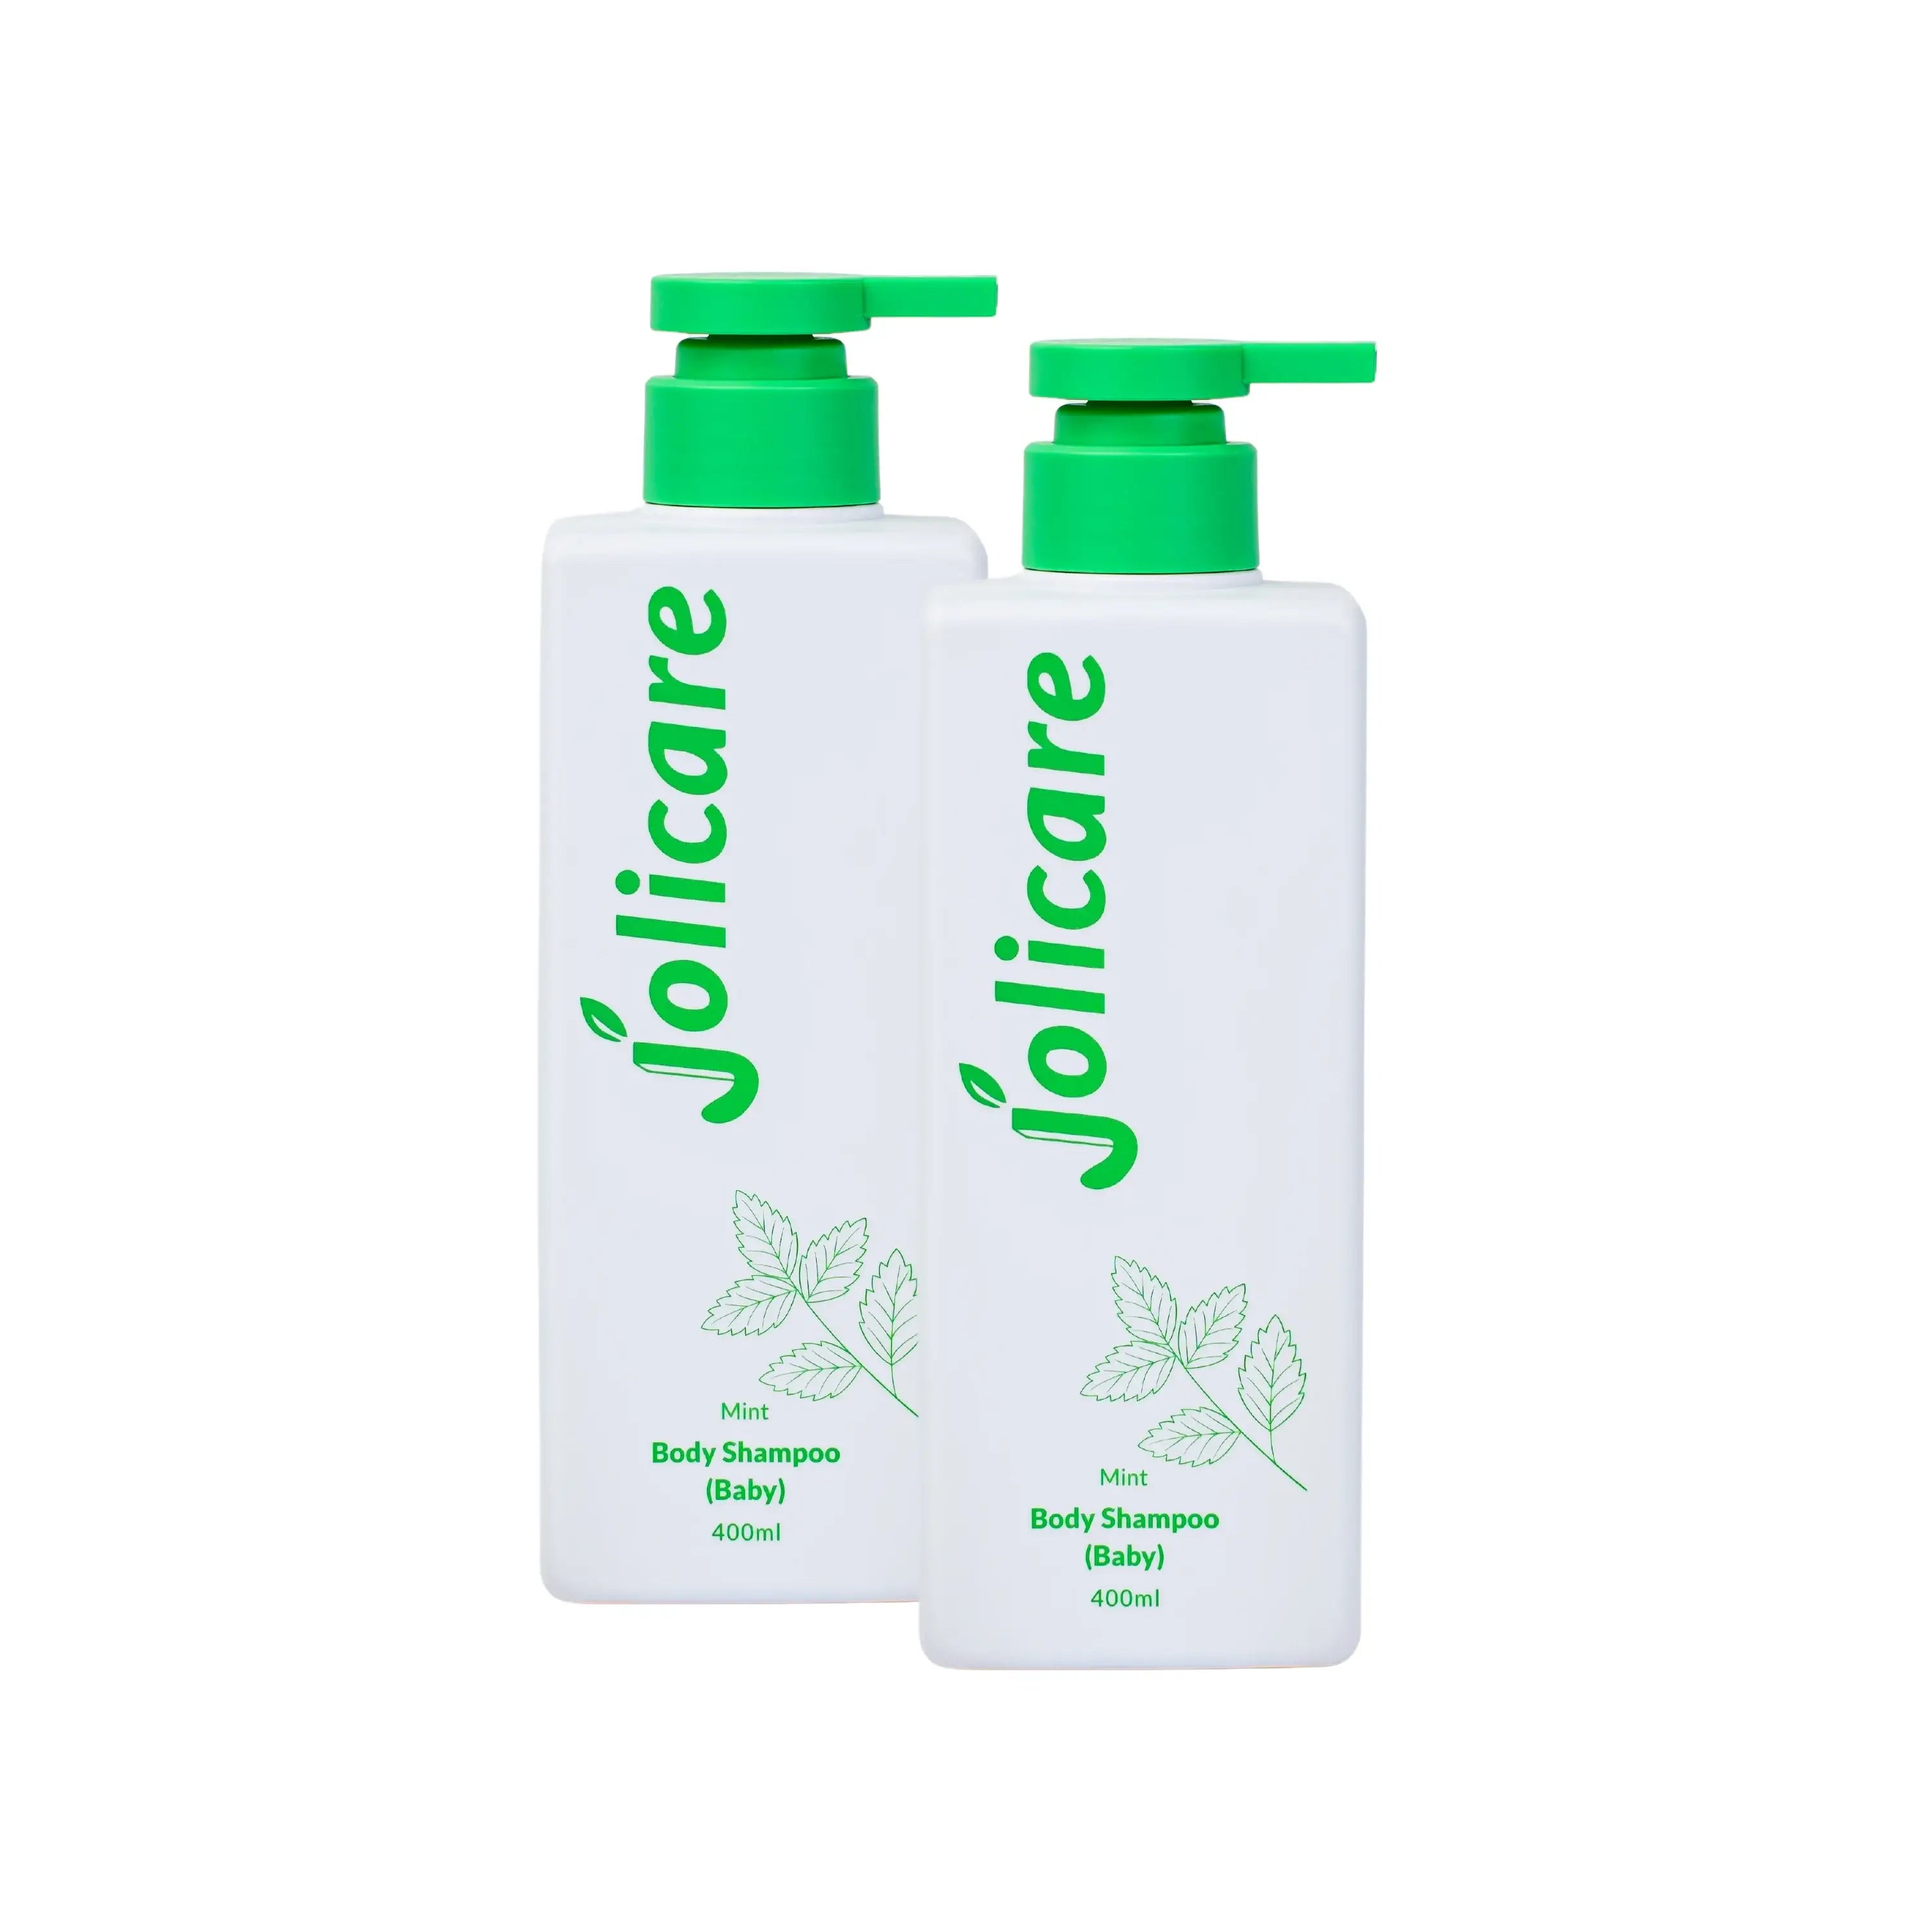 Jolicare Body Shampoo - Twin Set